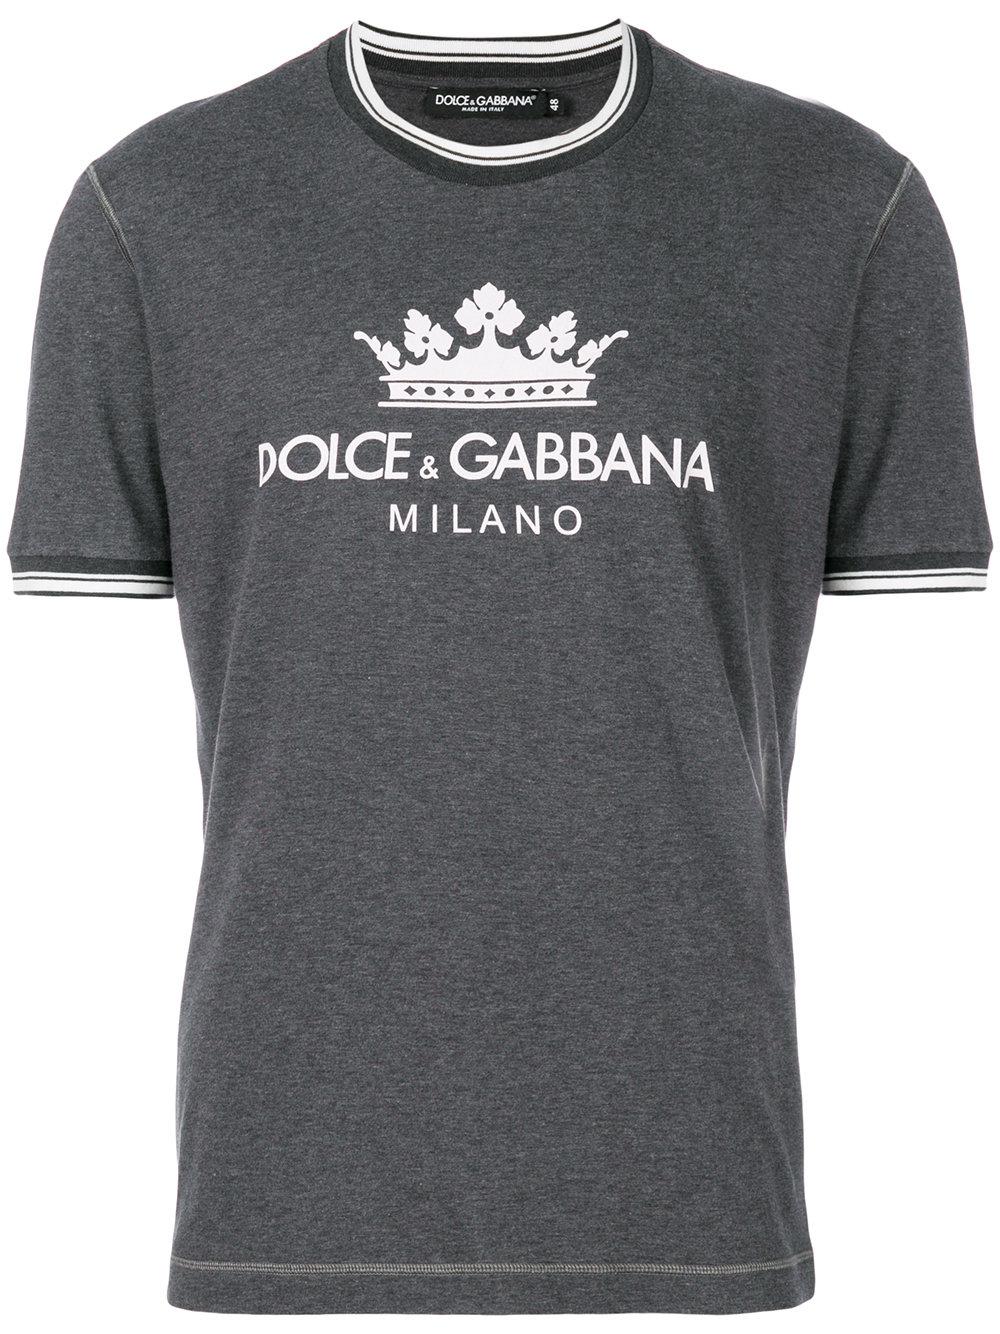 Dolce & Gabbana Cotton Logo Printed T-shirt in Grey (Gray) for Men - Lyst